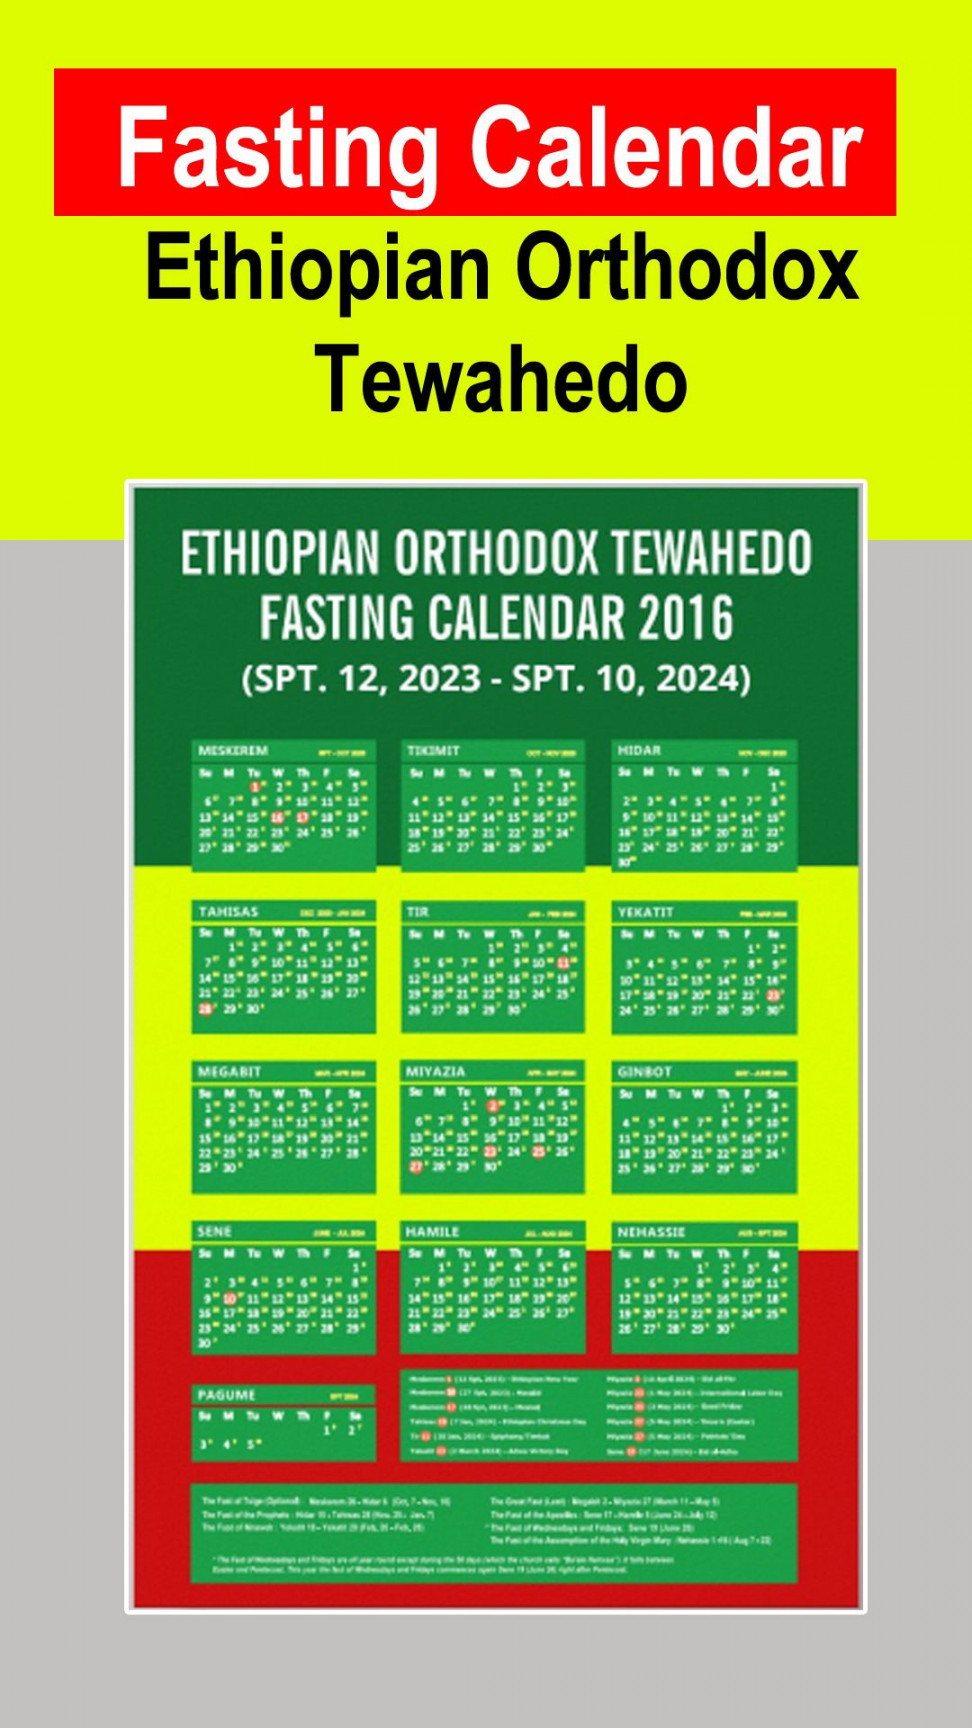 Download Ethiopian Orthodox Fasting Calendar PDF Poster Zazzle